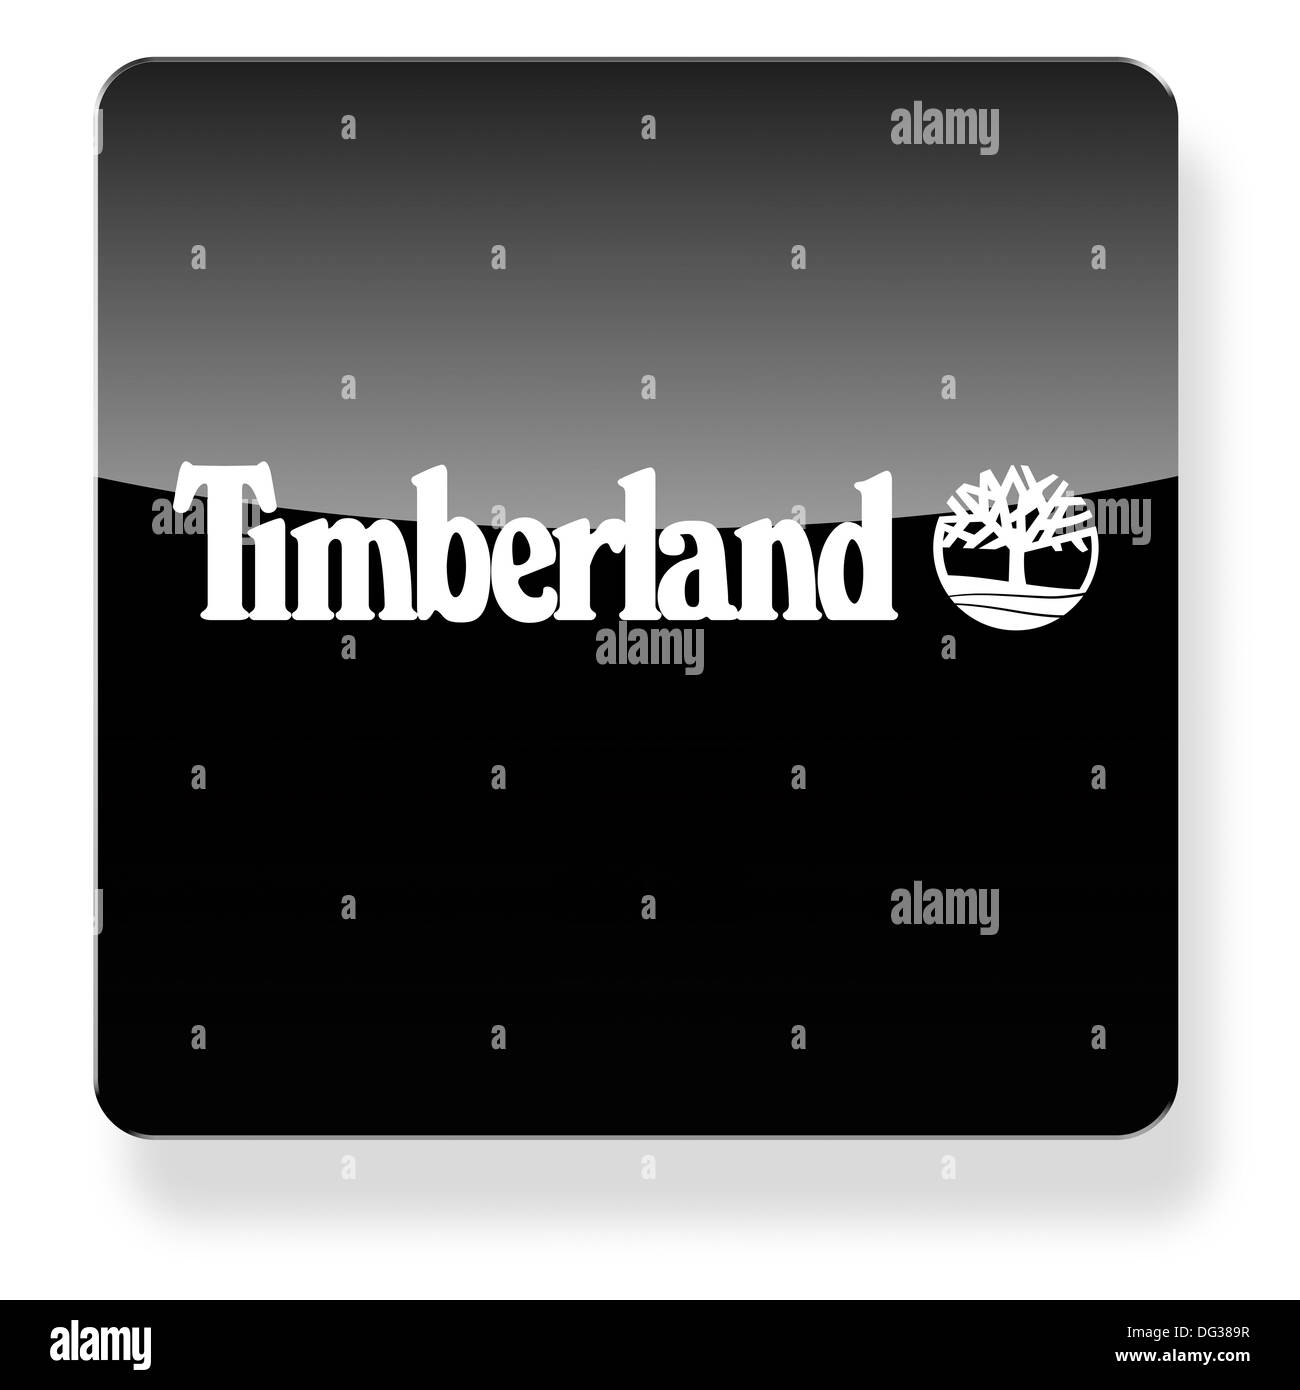 Timberland logo Black and White Stock Photos & Images - Alamy